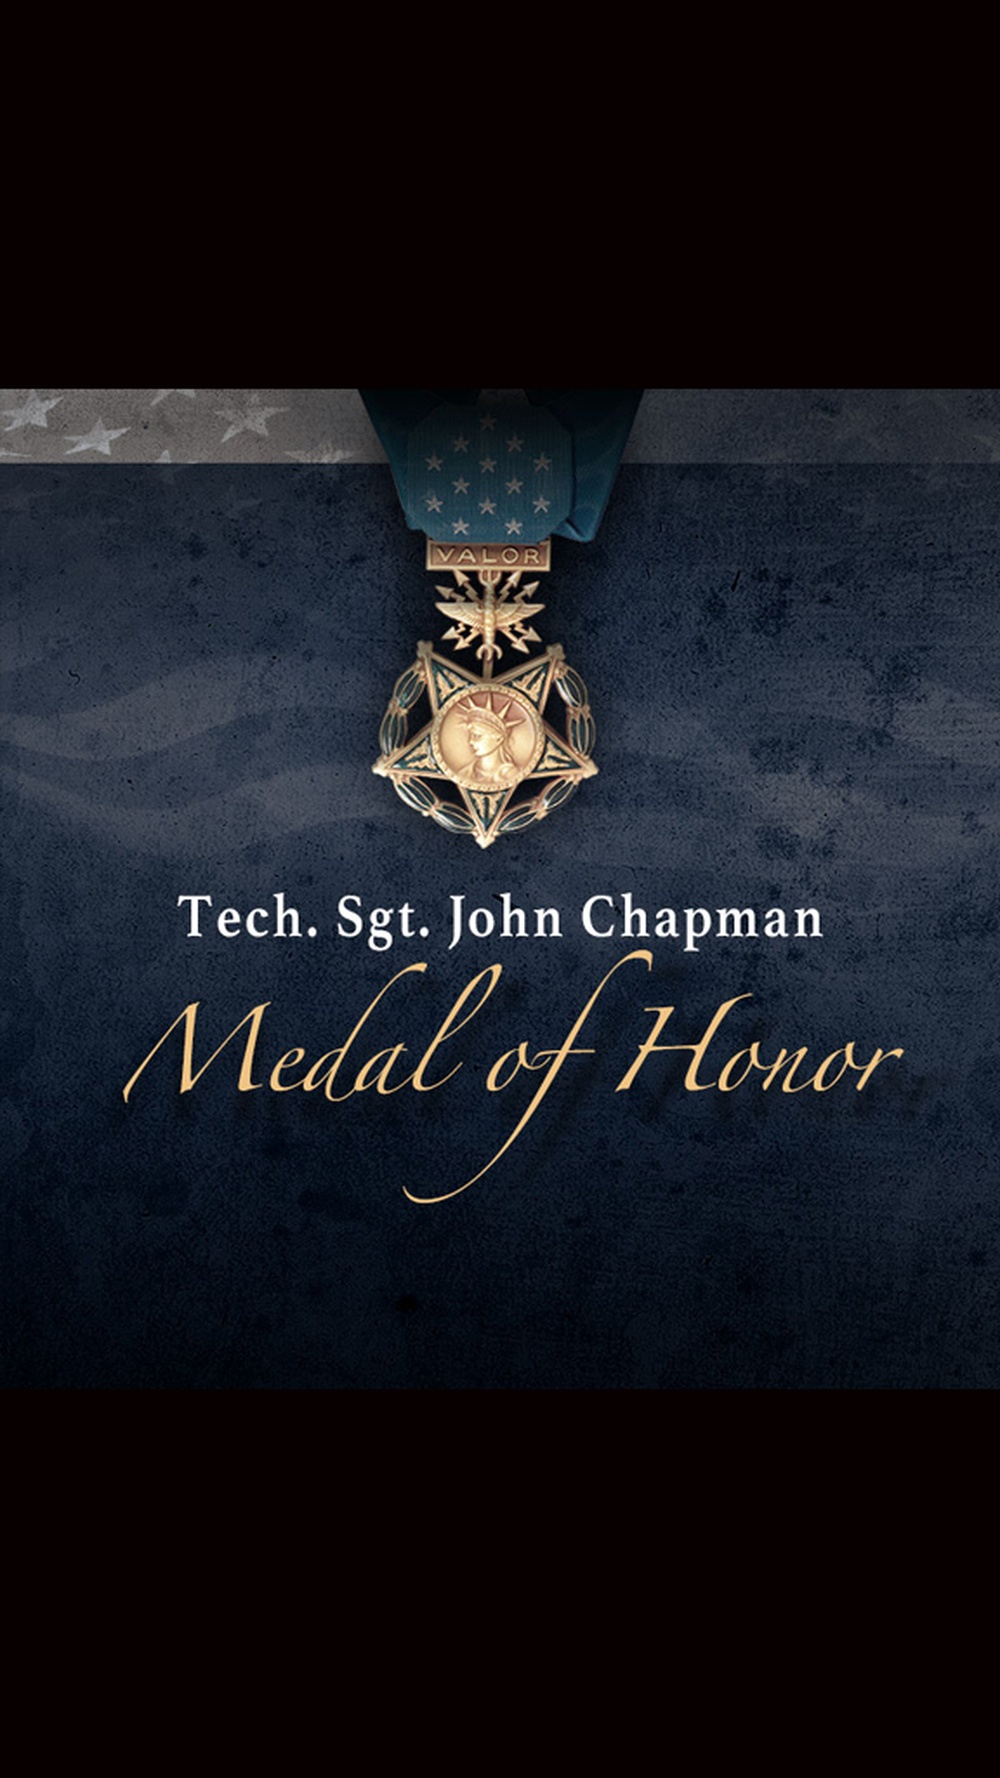 Updated Social Media Graphic - Tech. Sgt. John Chapman, Medal of Honor